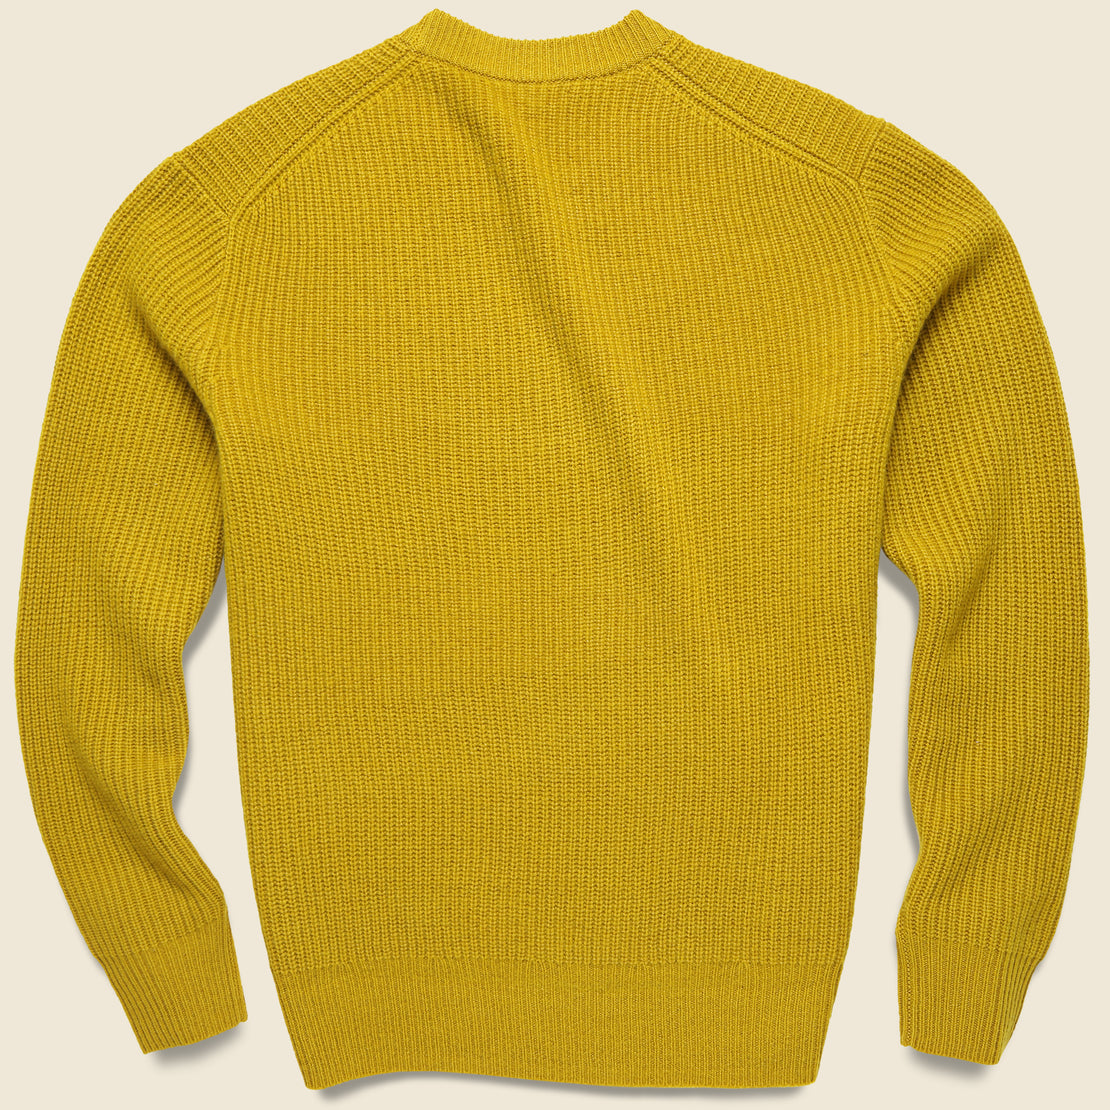 Cashmere Jordan Sweater - Mustard - Alex Mill - STAG Provisions - Tops - Sweater